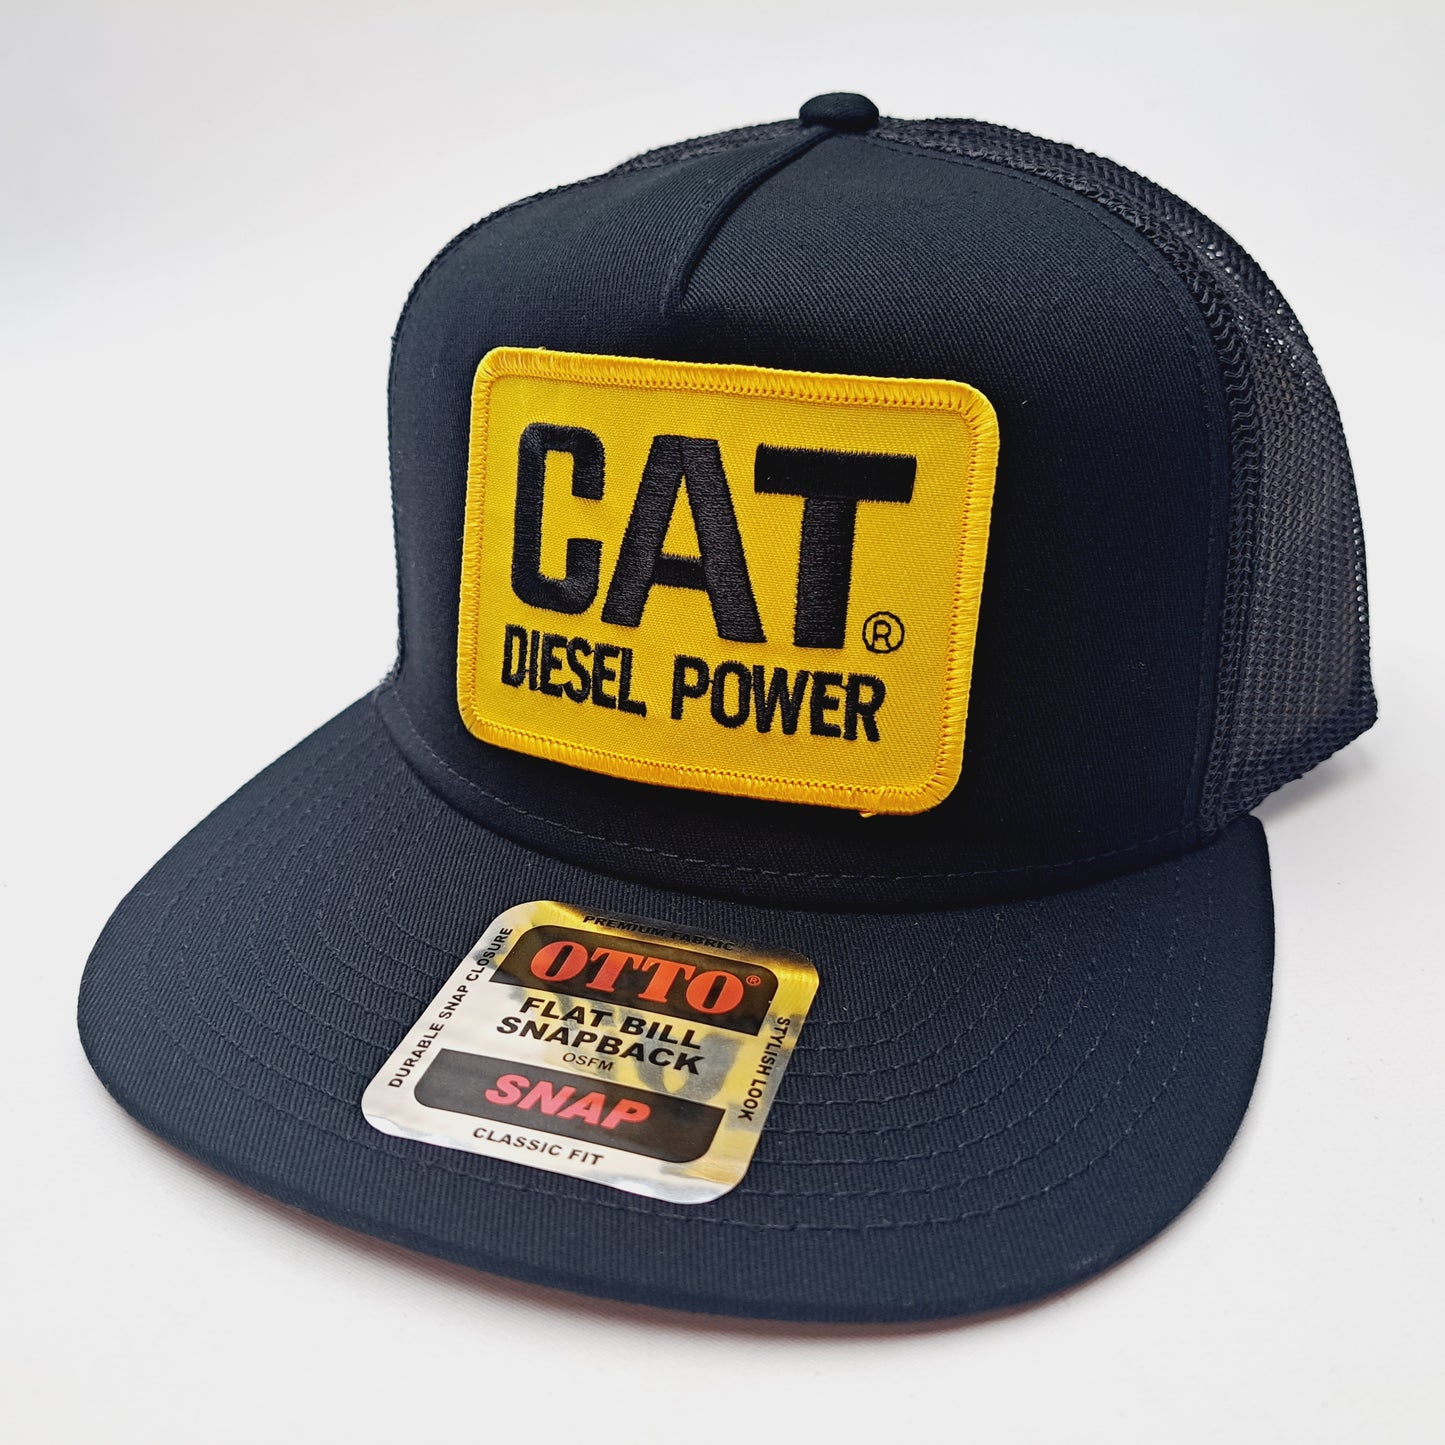 Cat Diesel Power Embroidered Patch Flat bill Trucker Mesh Snapback Cap OTTO